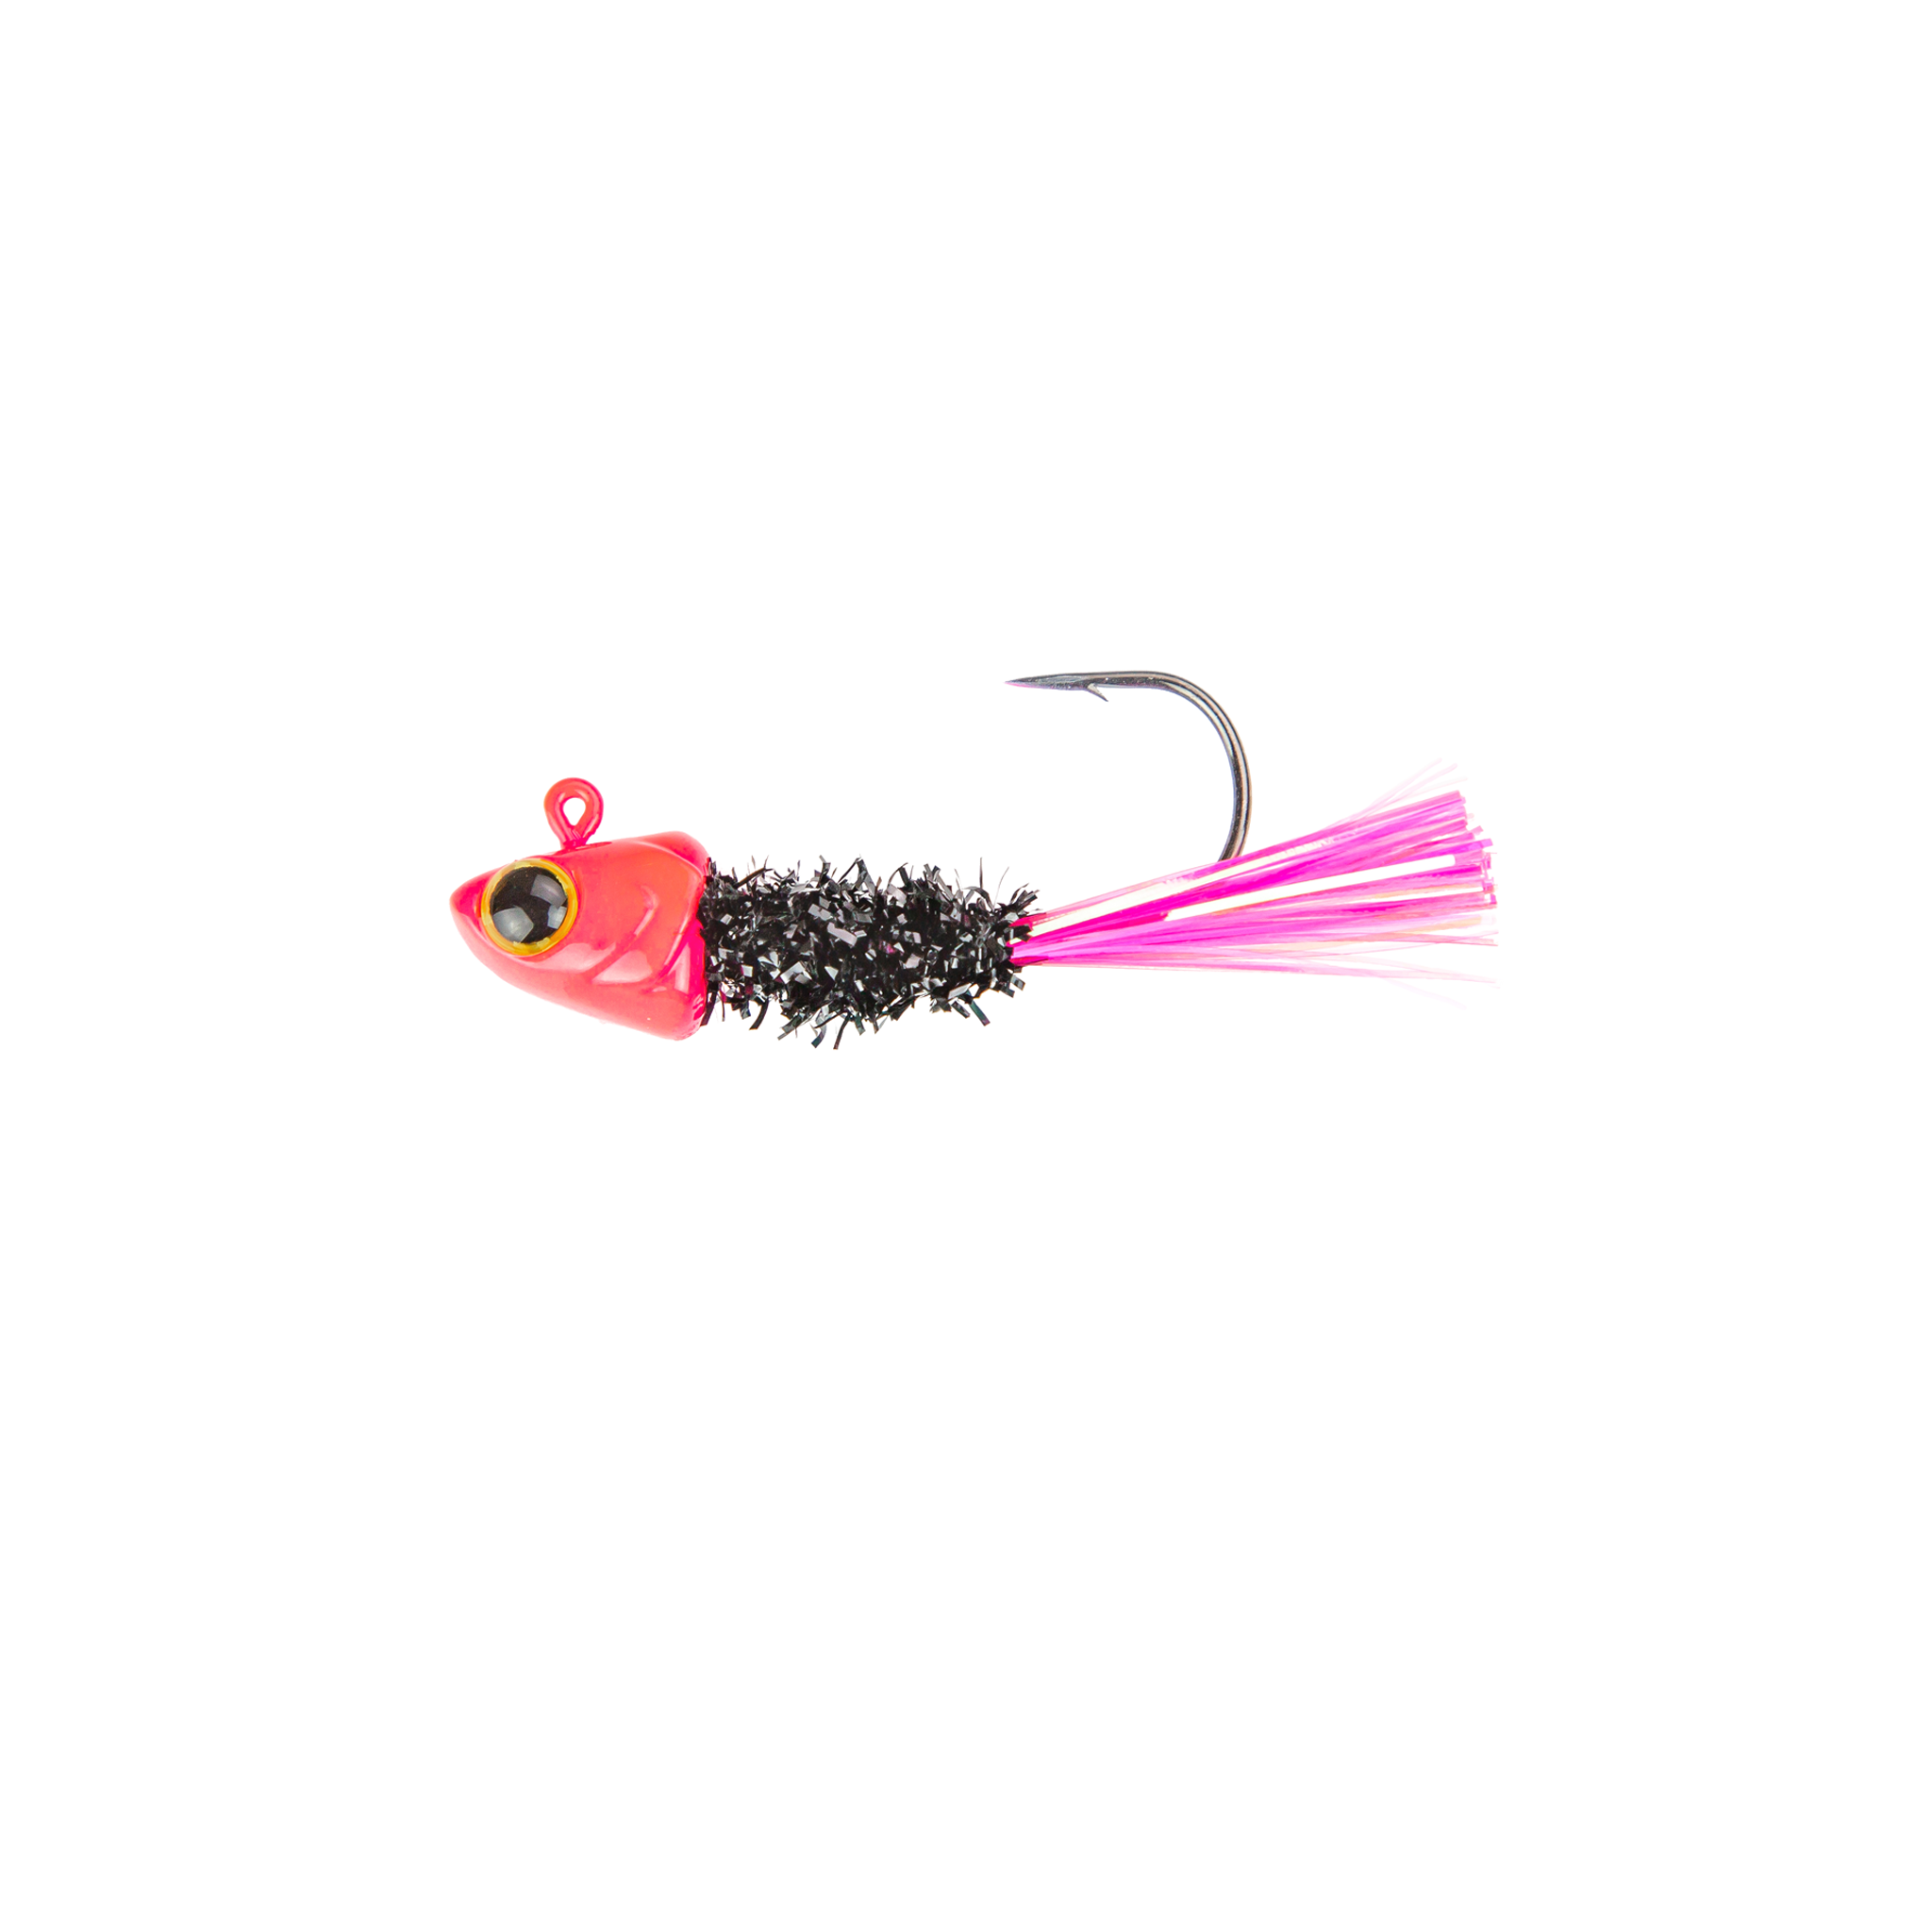 6th Sense Fishing - Crappie - Spangle Tinsel Jigs - Black Rose